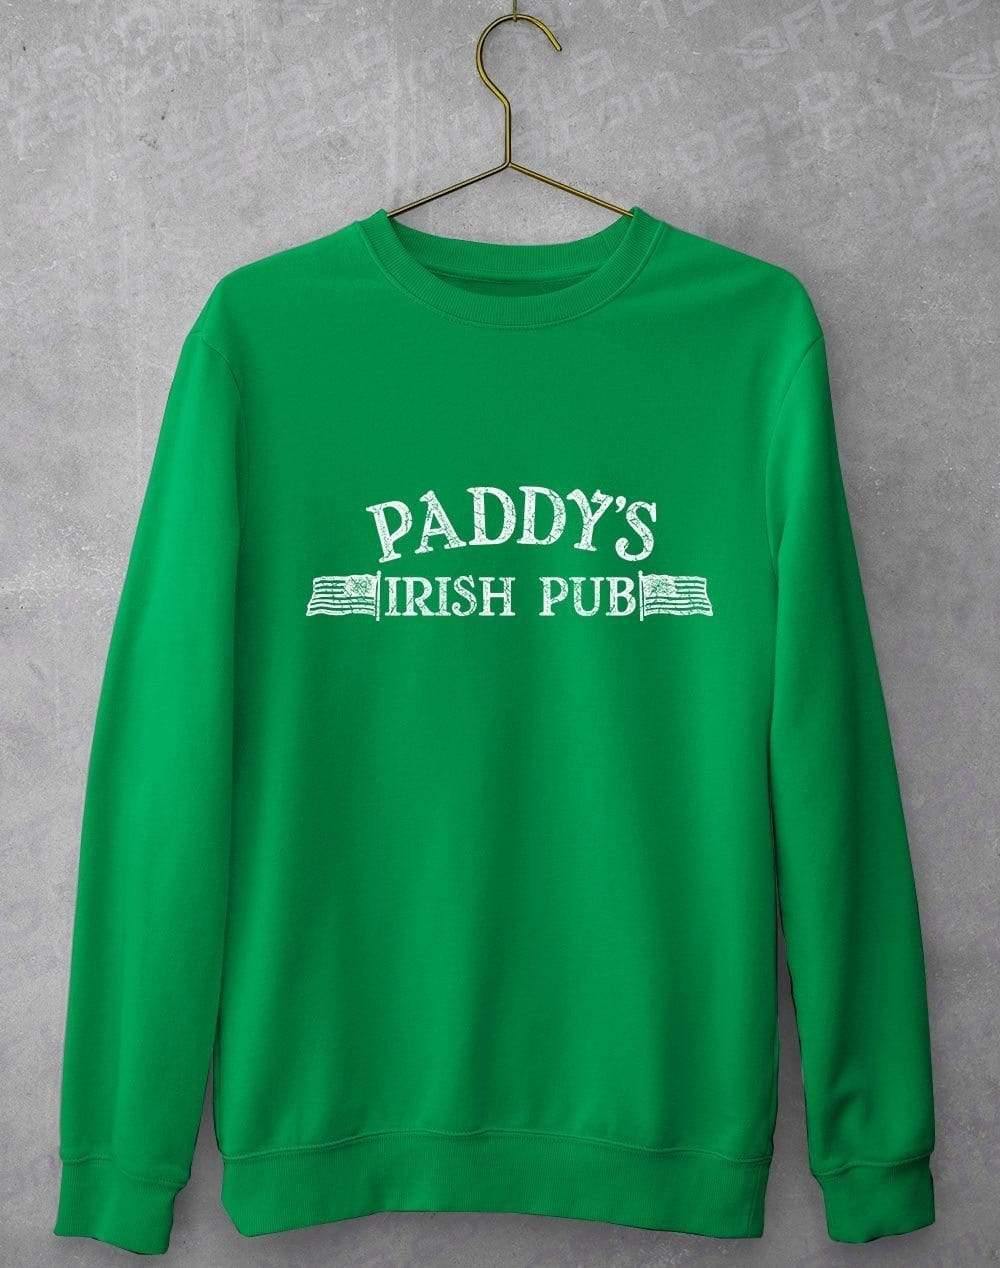 Paddys Irish Pub Sweatshirt S / Kelly Green  - Off World Tees